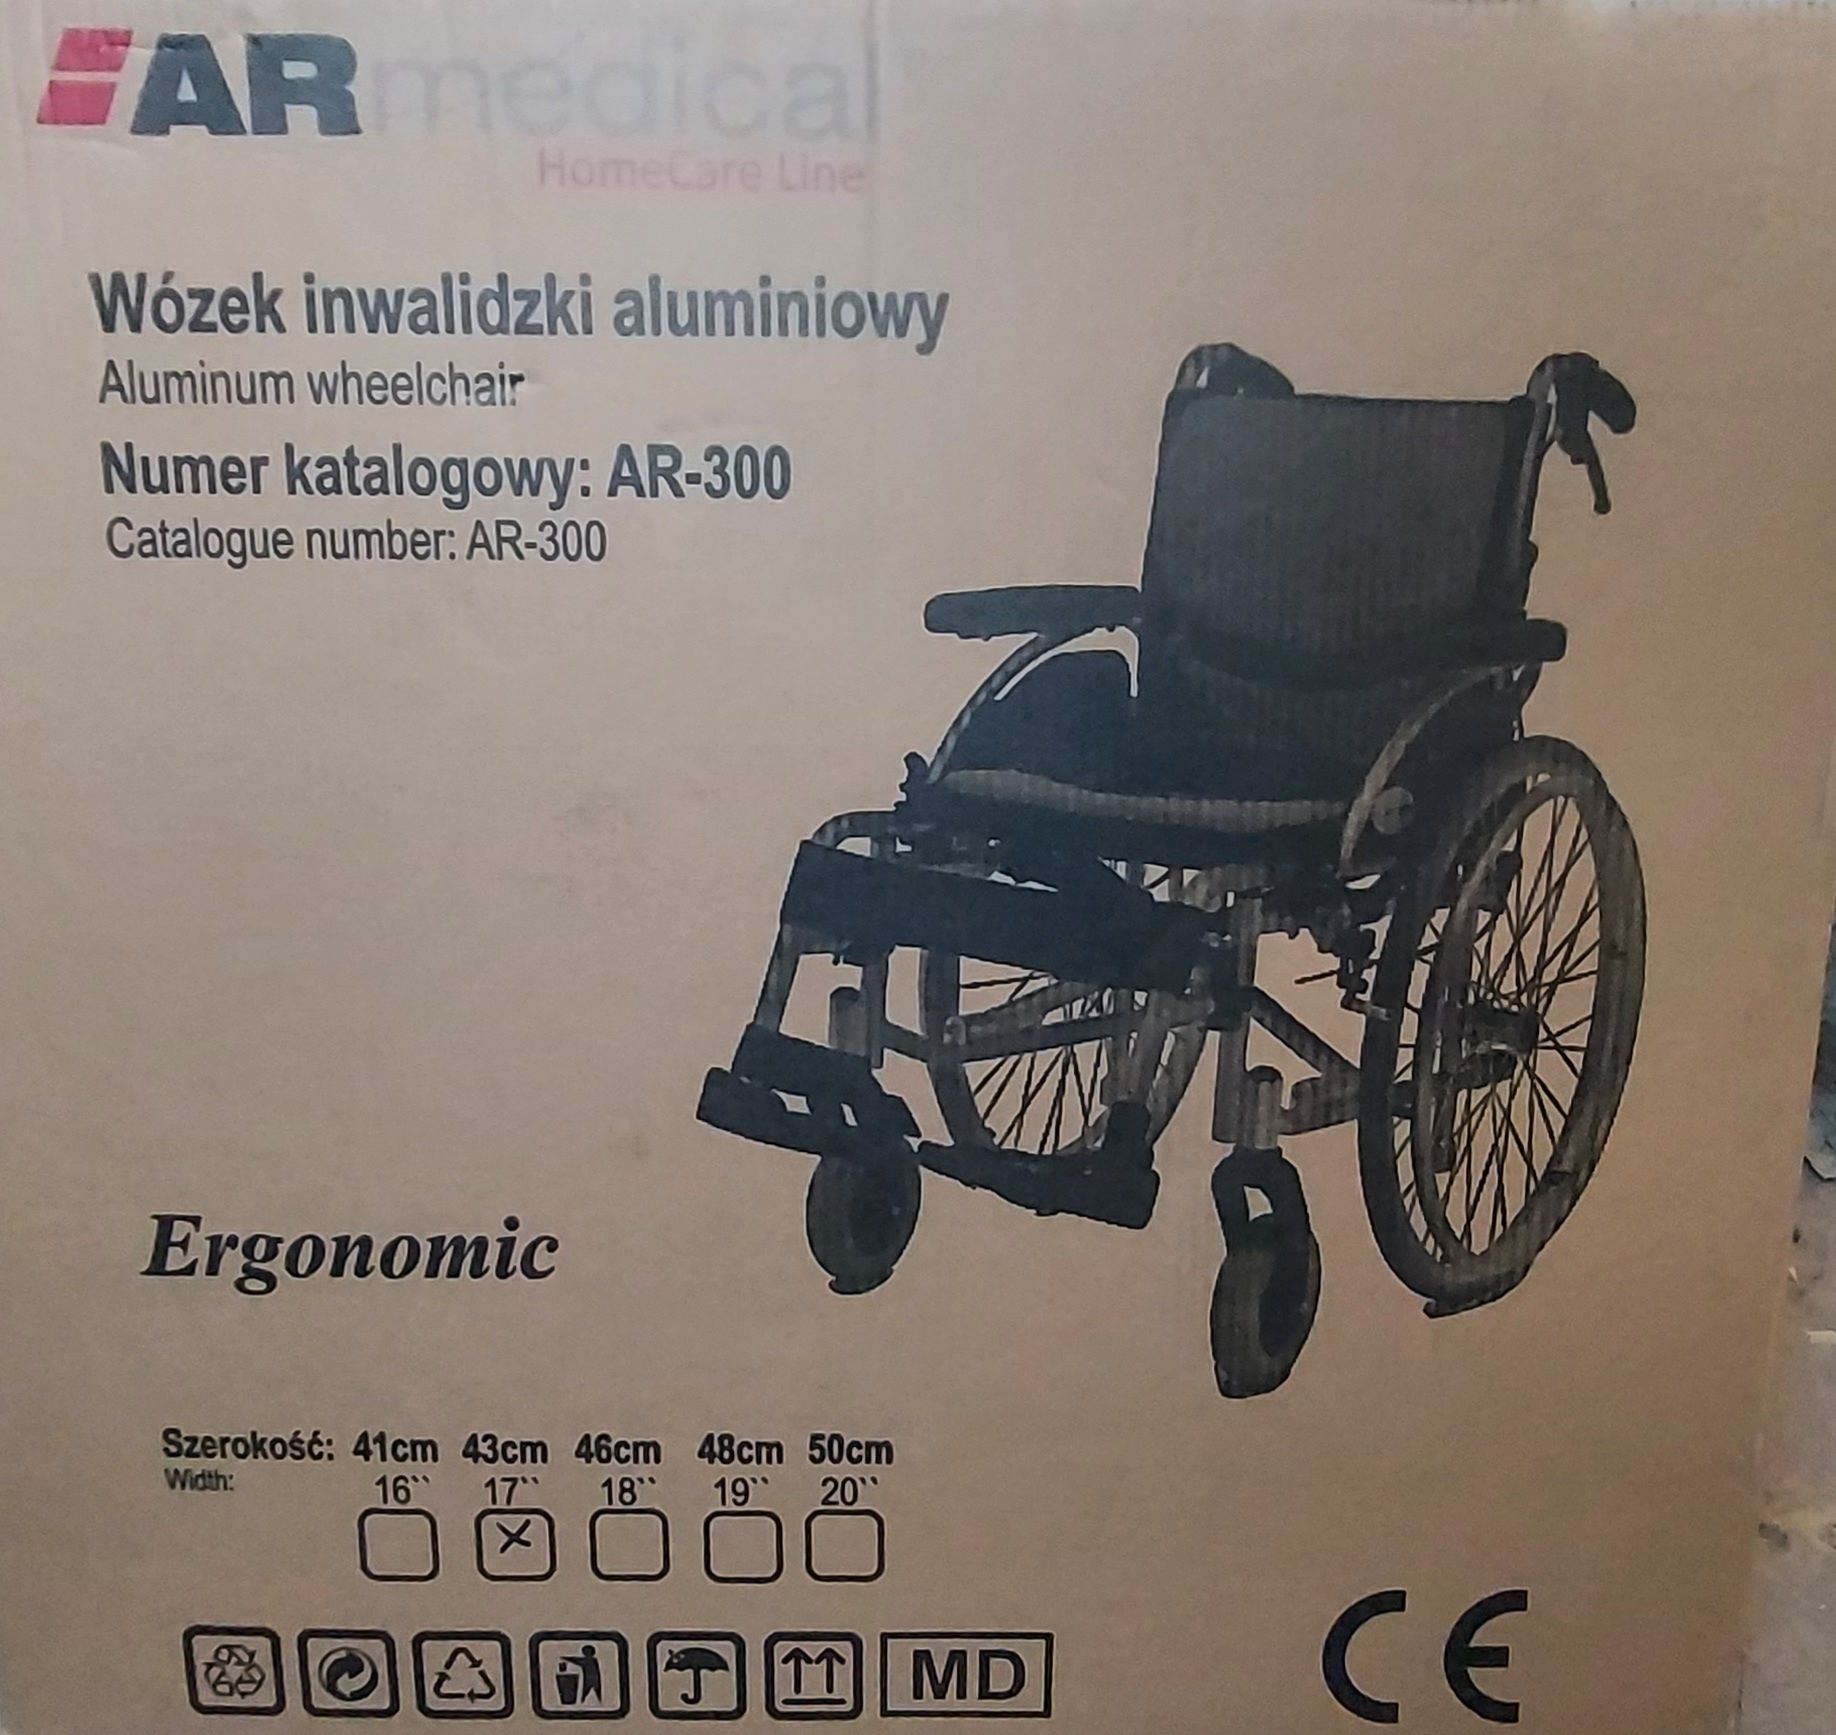 Wózek inwalidzki AR-300 ultralekki lekki aluminiowy